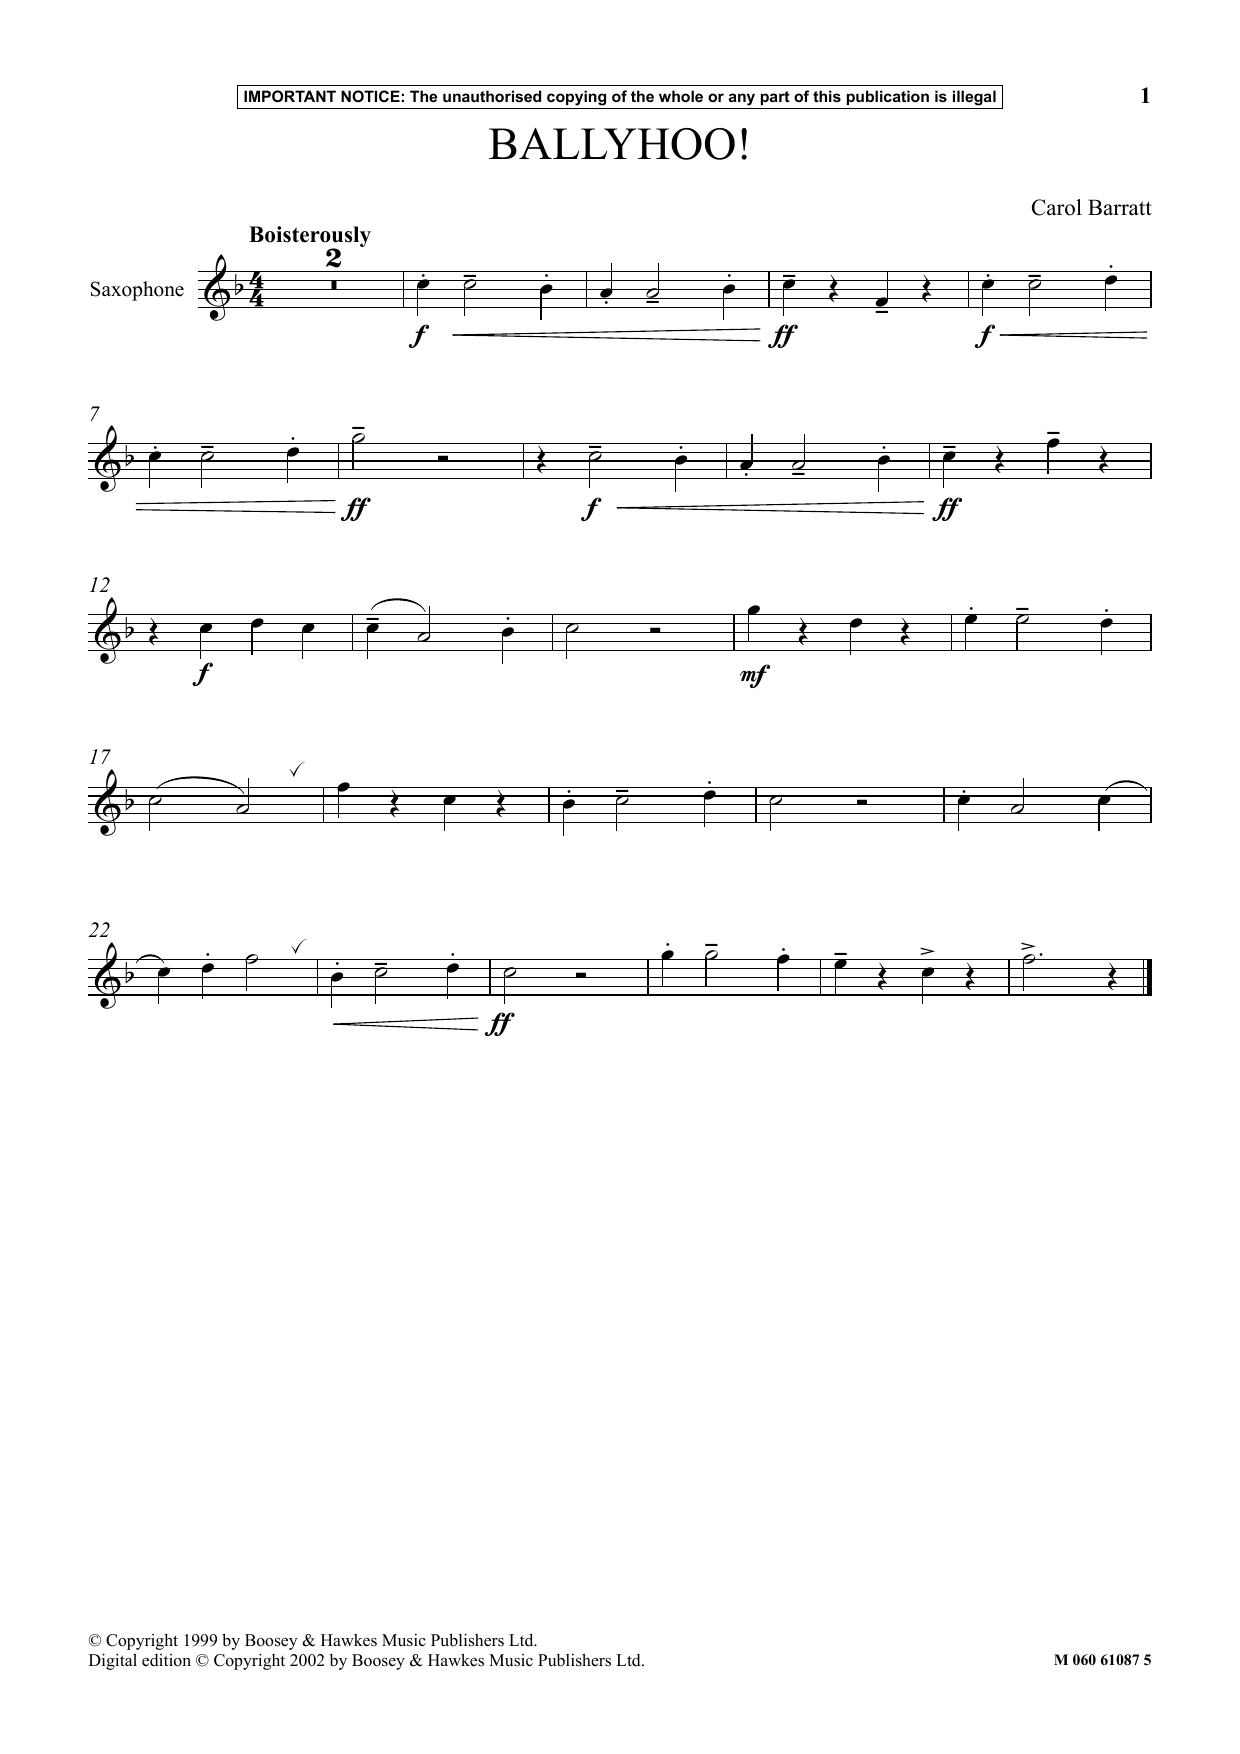 Carol Barratt Ballyhoo! Sheet Music Notes & Chords for Instrumental Solo - Download or Print PDF